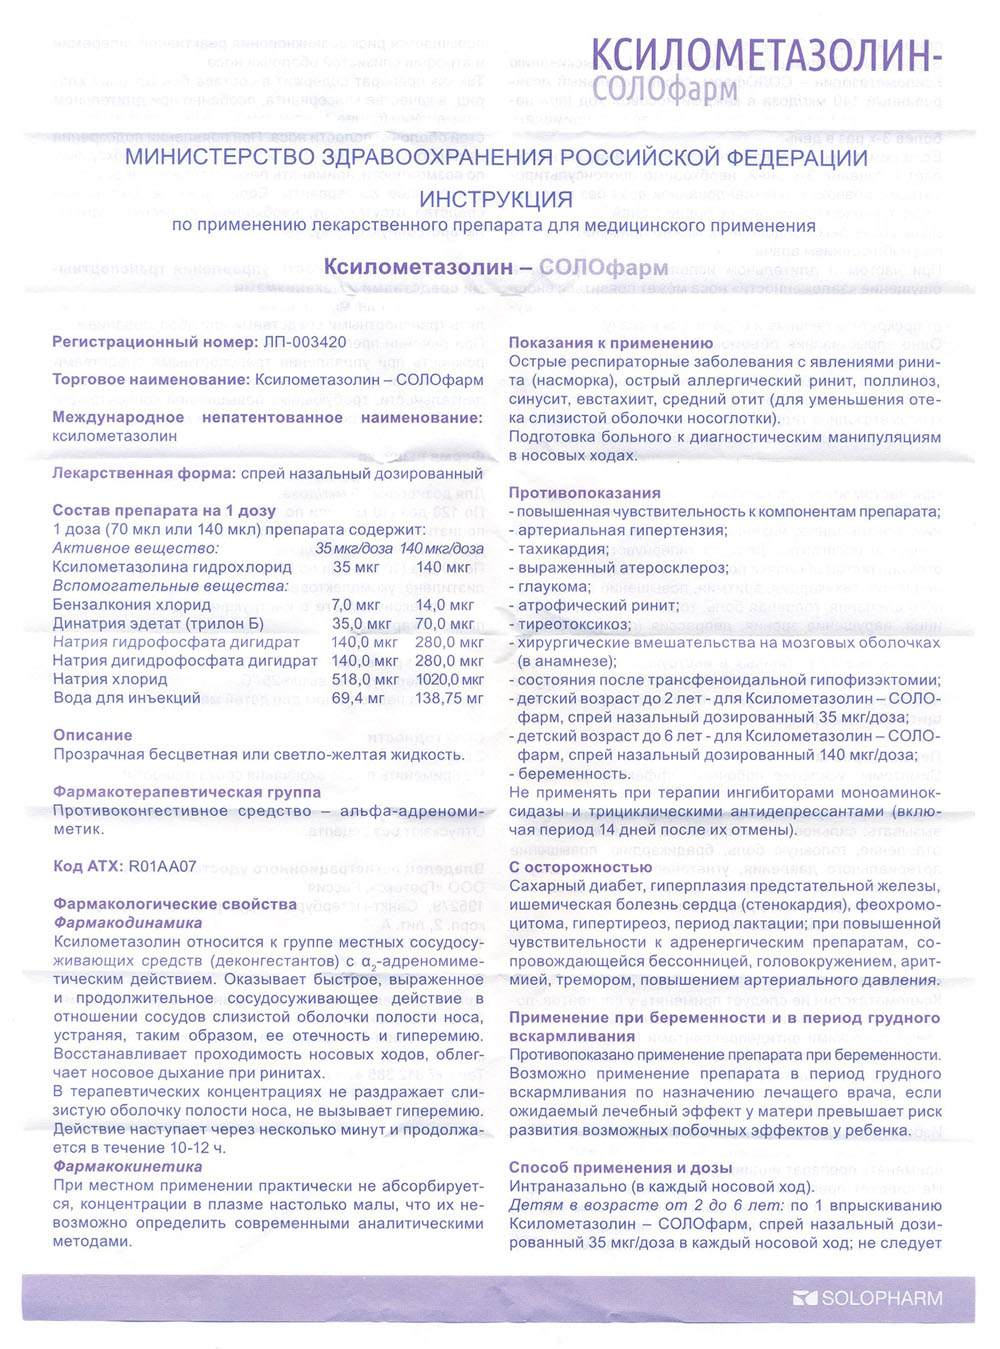 Ксилометазолин СОЛОфарм инструкция